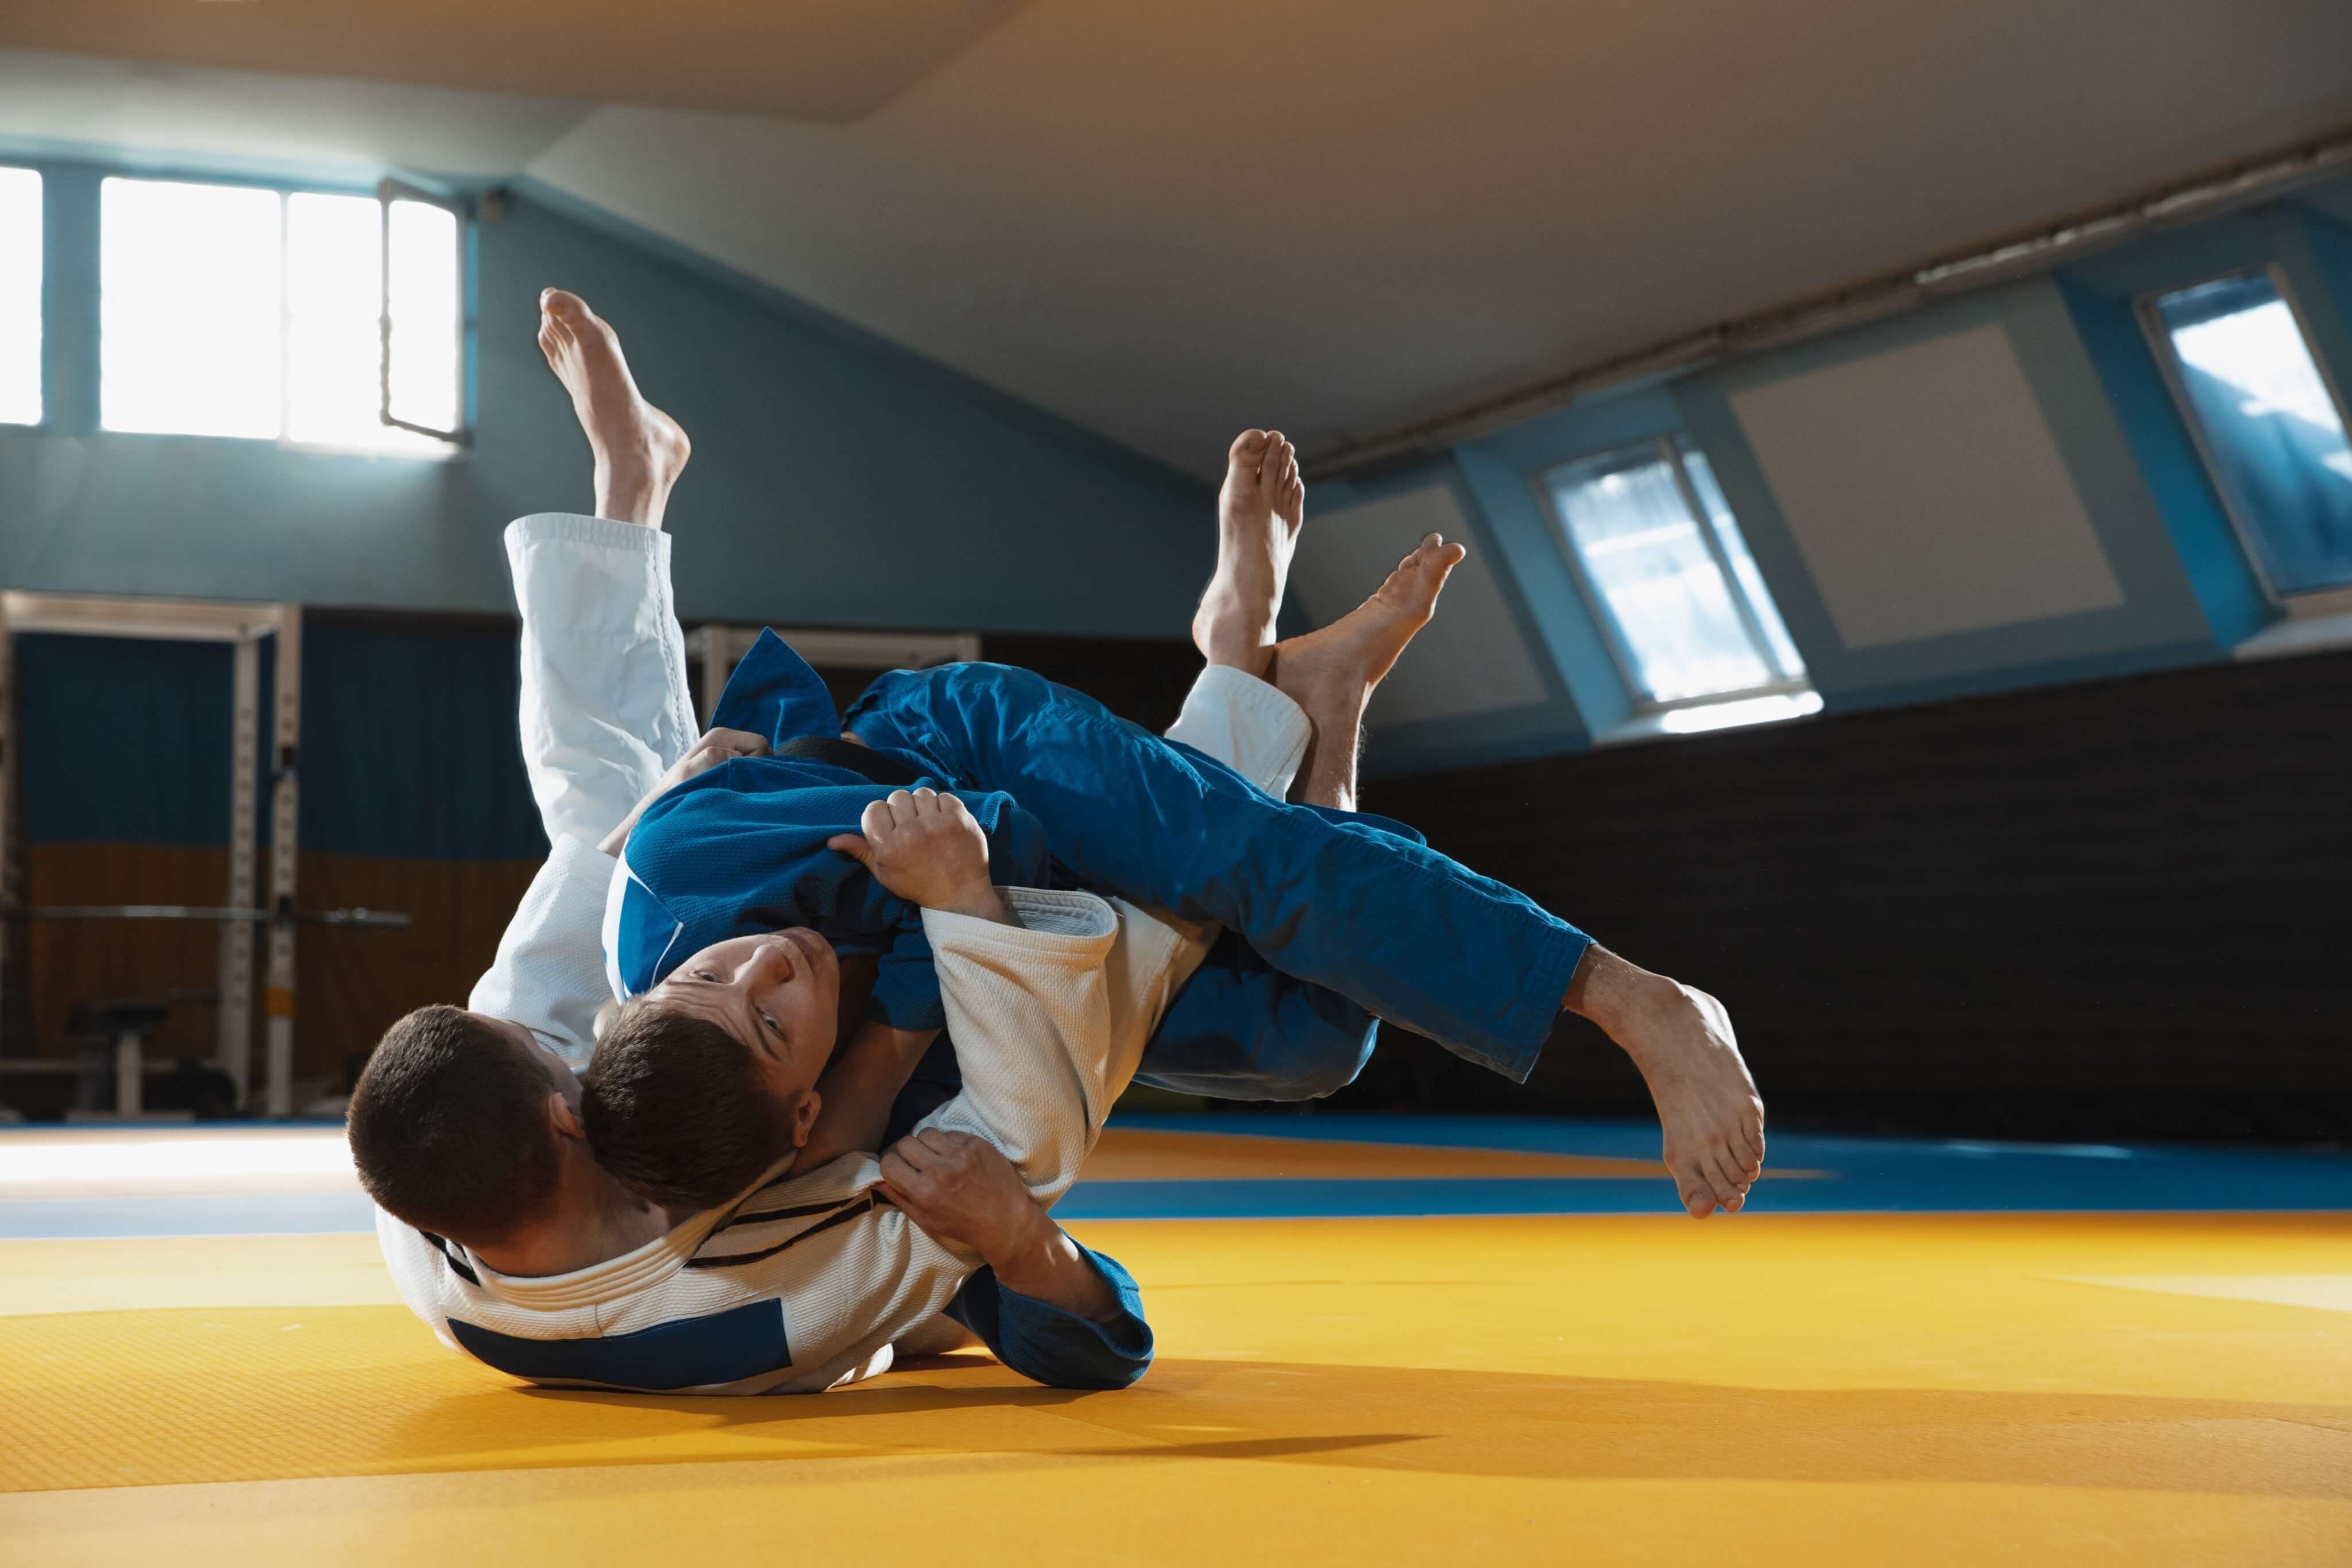 UK Brazilian Jiu-Jitsu choose Sport:80 to support digital transformation